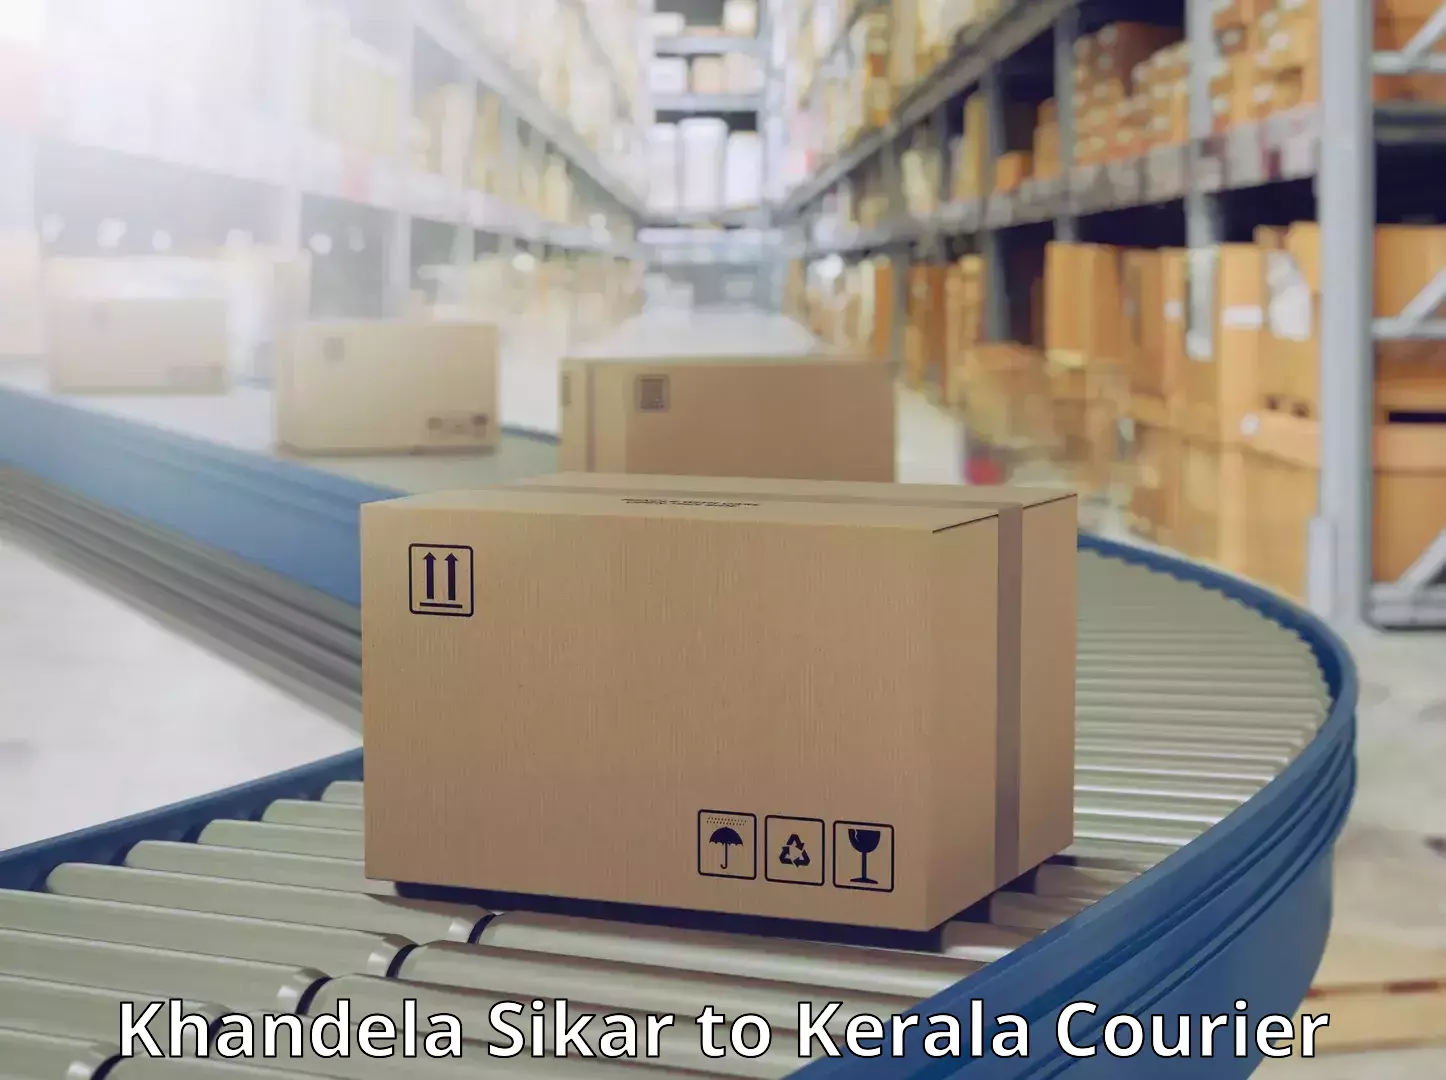 Holiday shipping services Khandela Sikar to Kerala